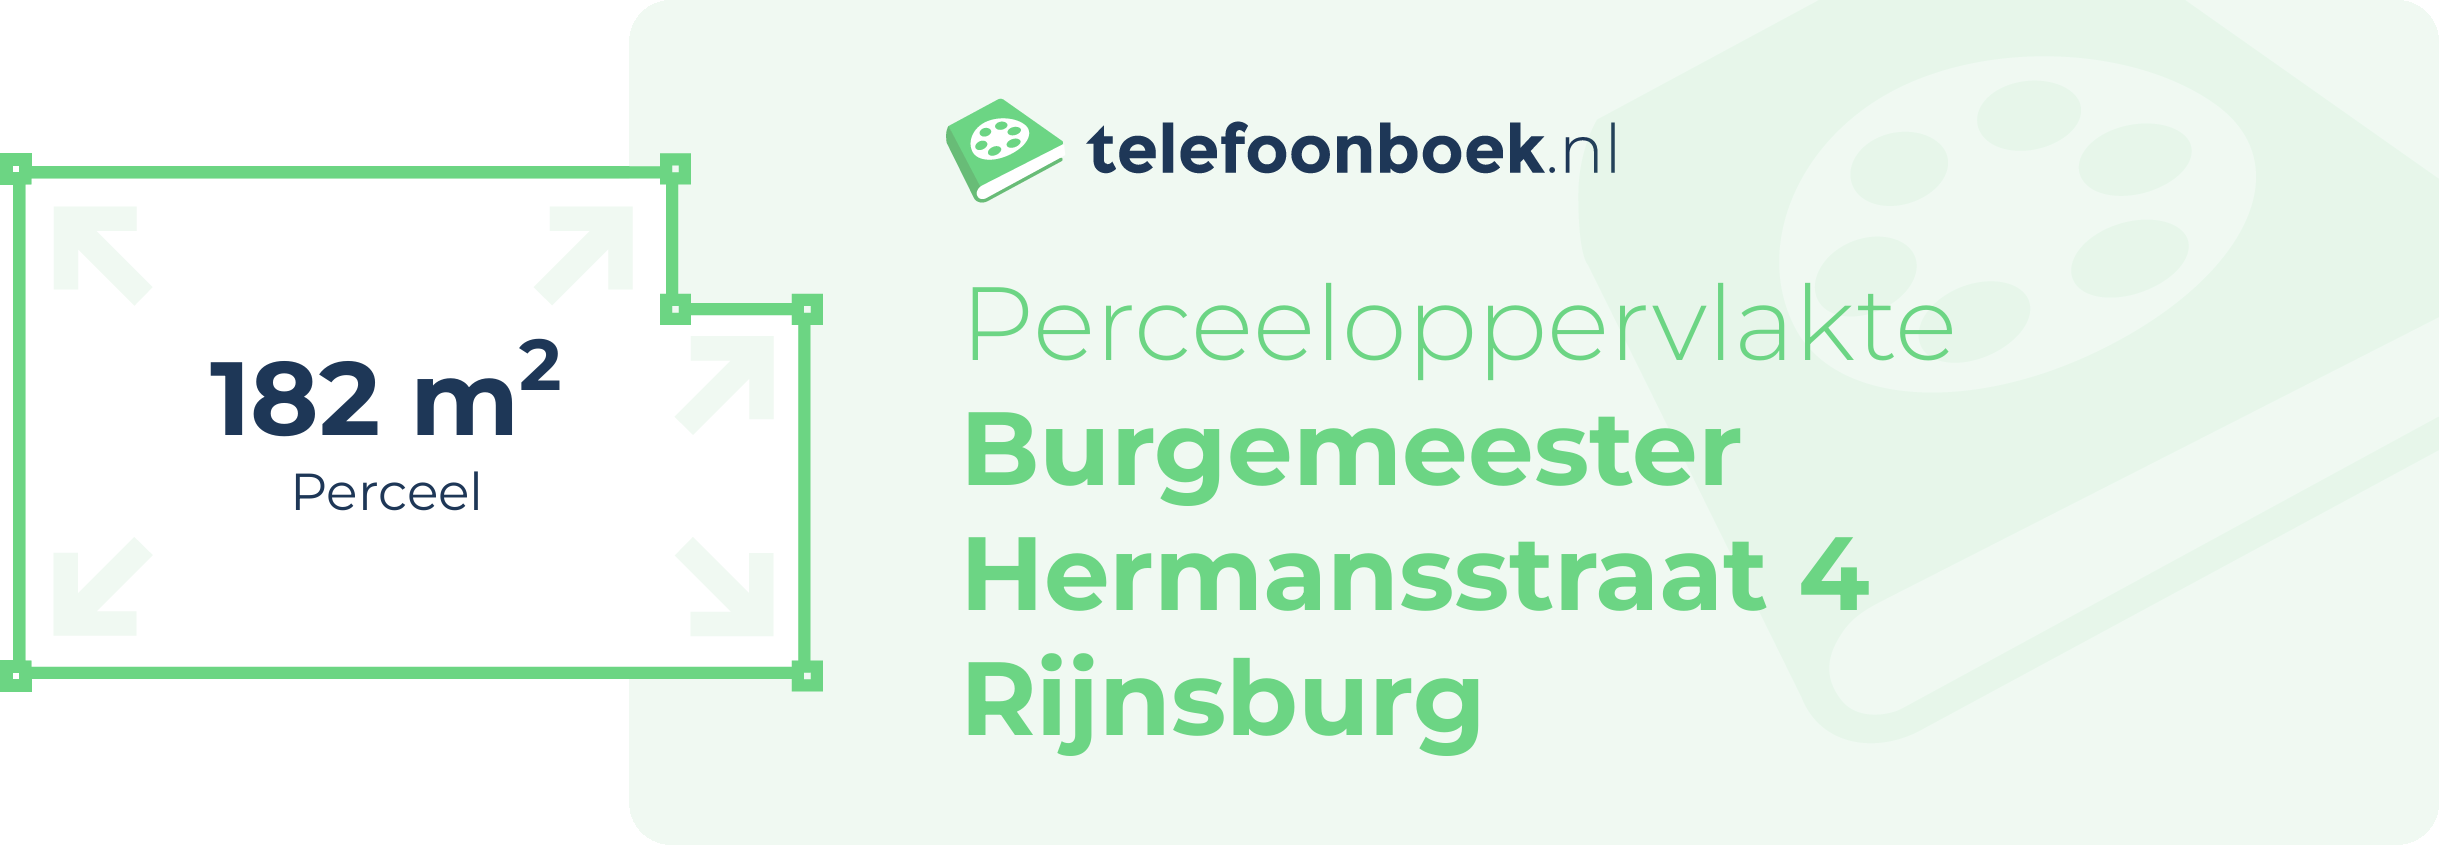 Perceeloppervlakte Burgemeester Hermansstraat 4 Rijnsburg